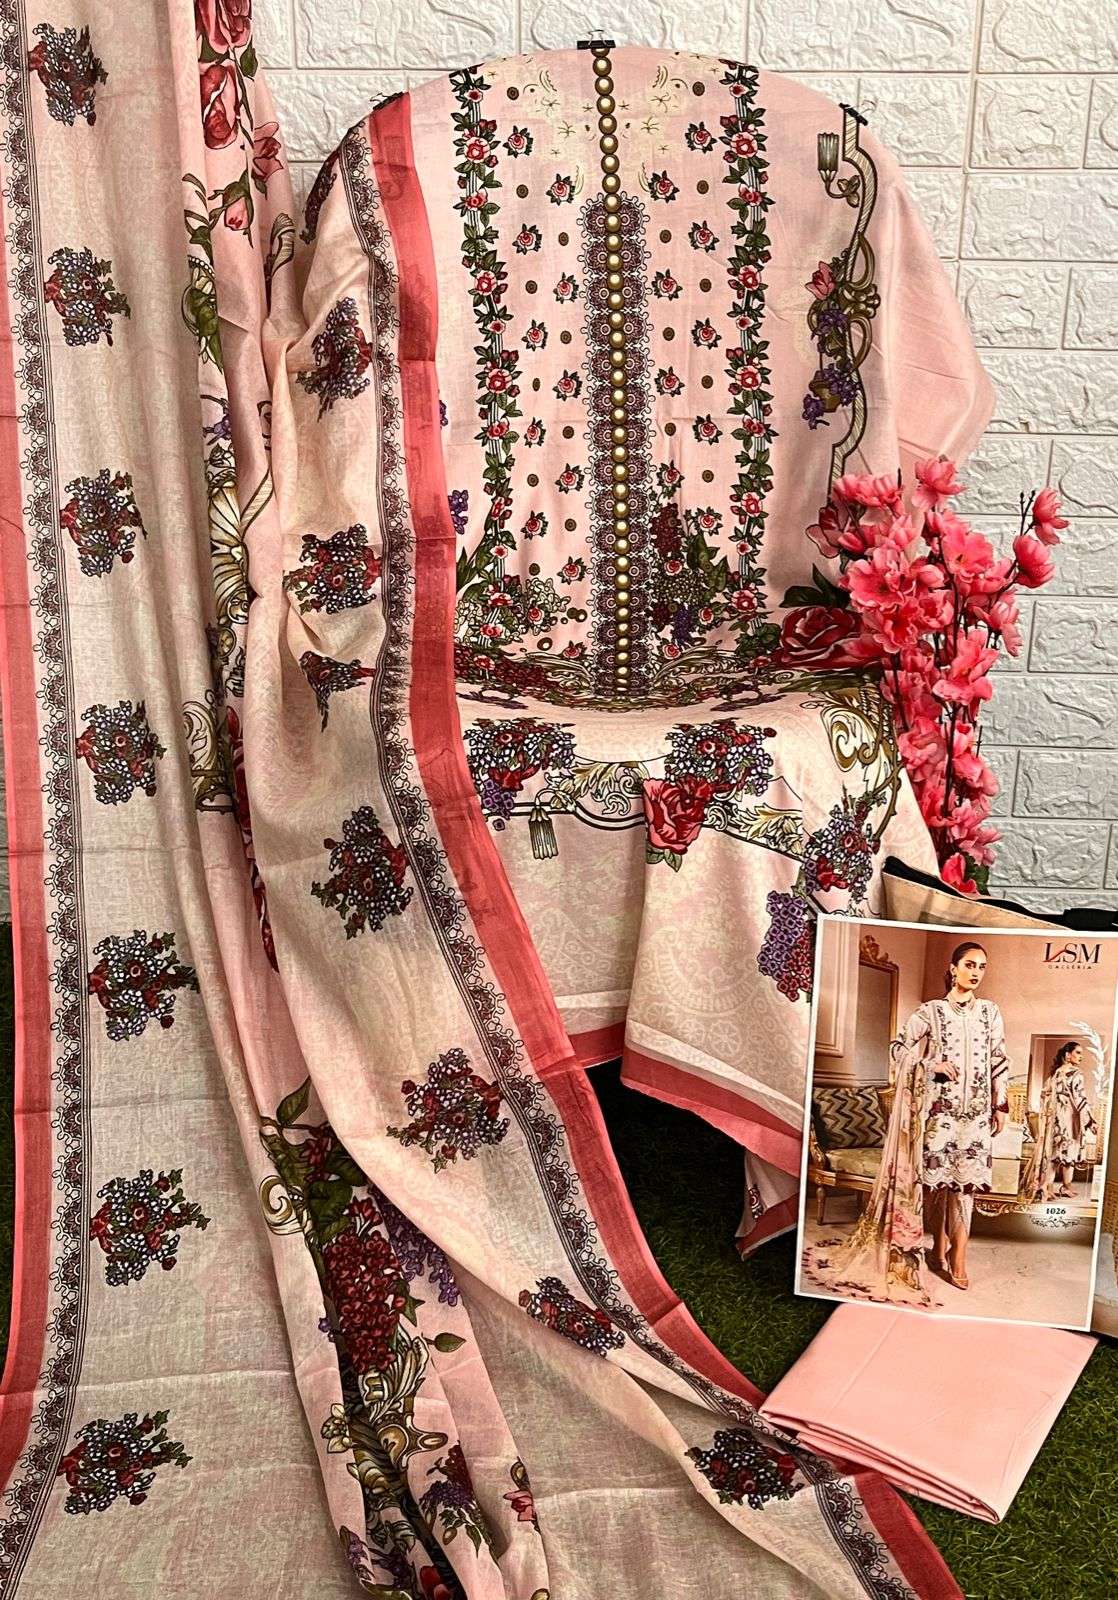 lsm galleria parian dream vol-3 1021-1026 series fancy designer pakistani salwar suits catalogue wholesaler in surat 